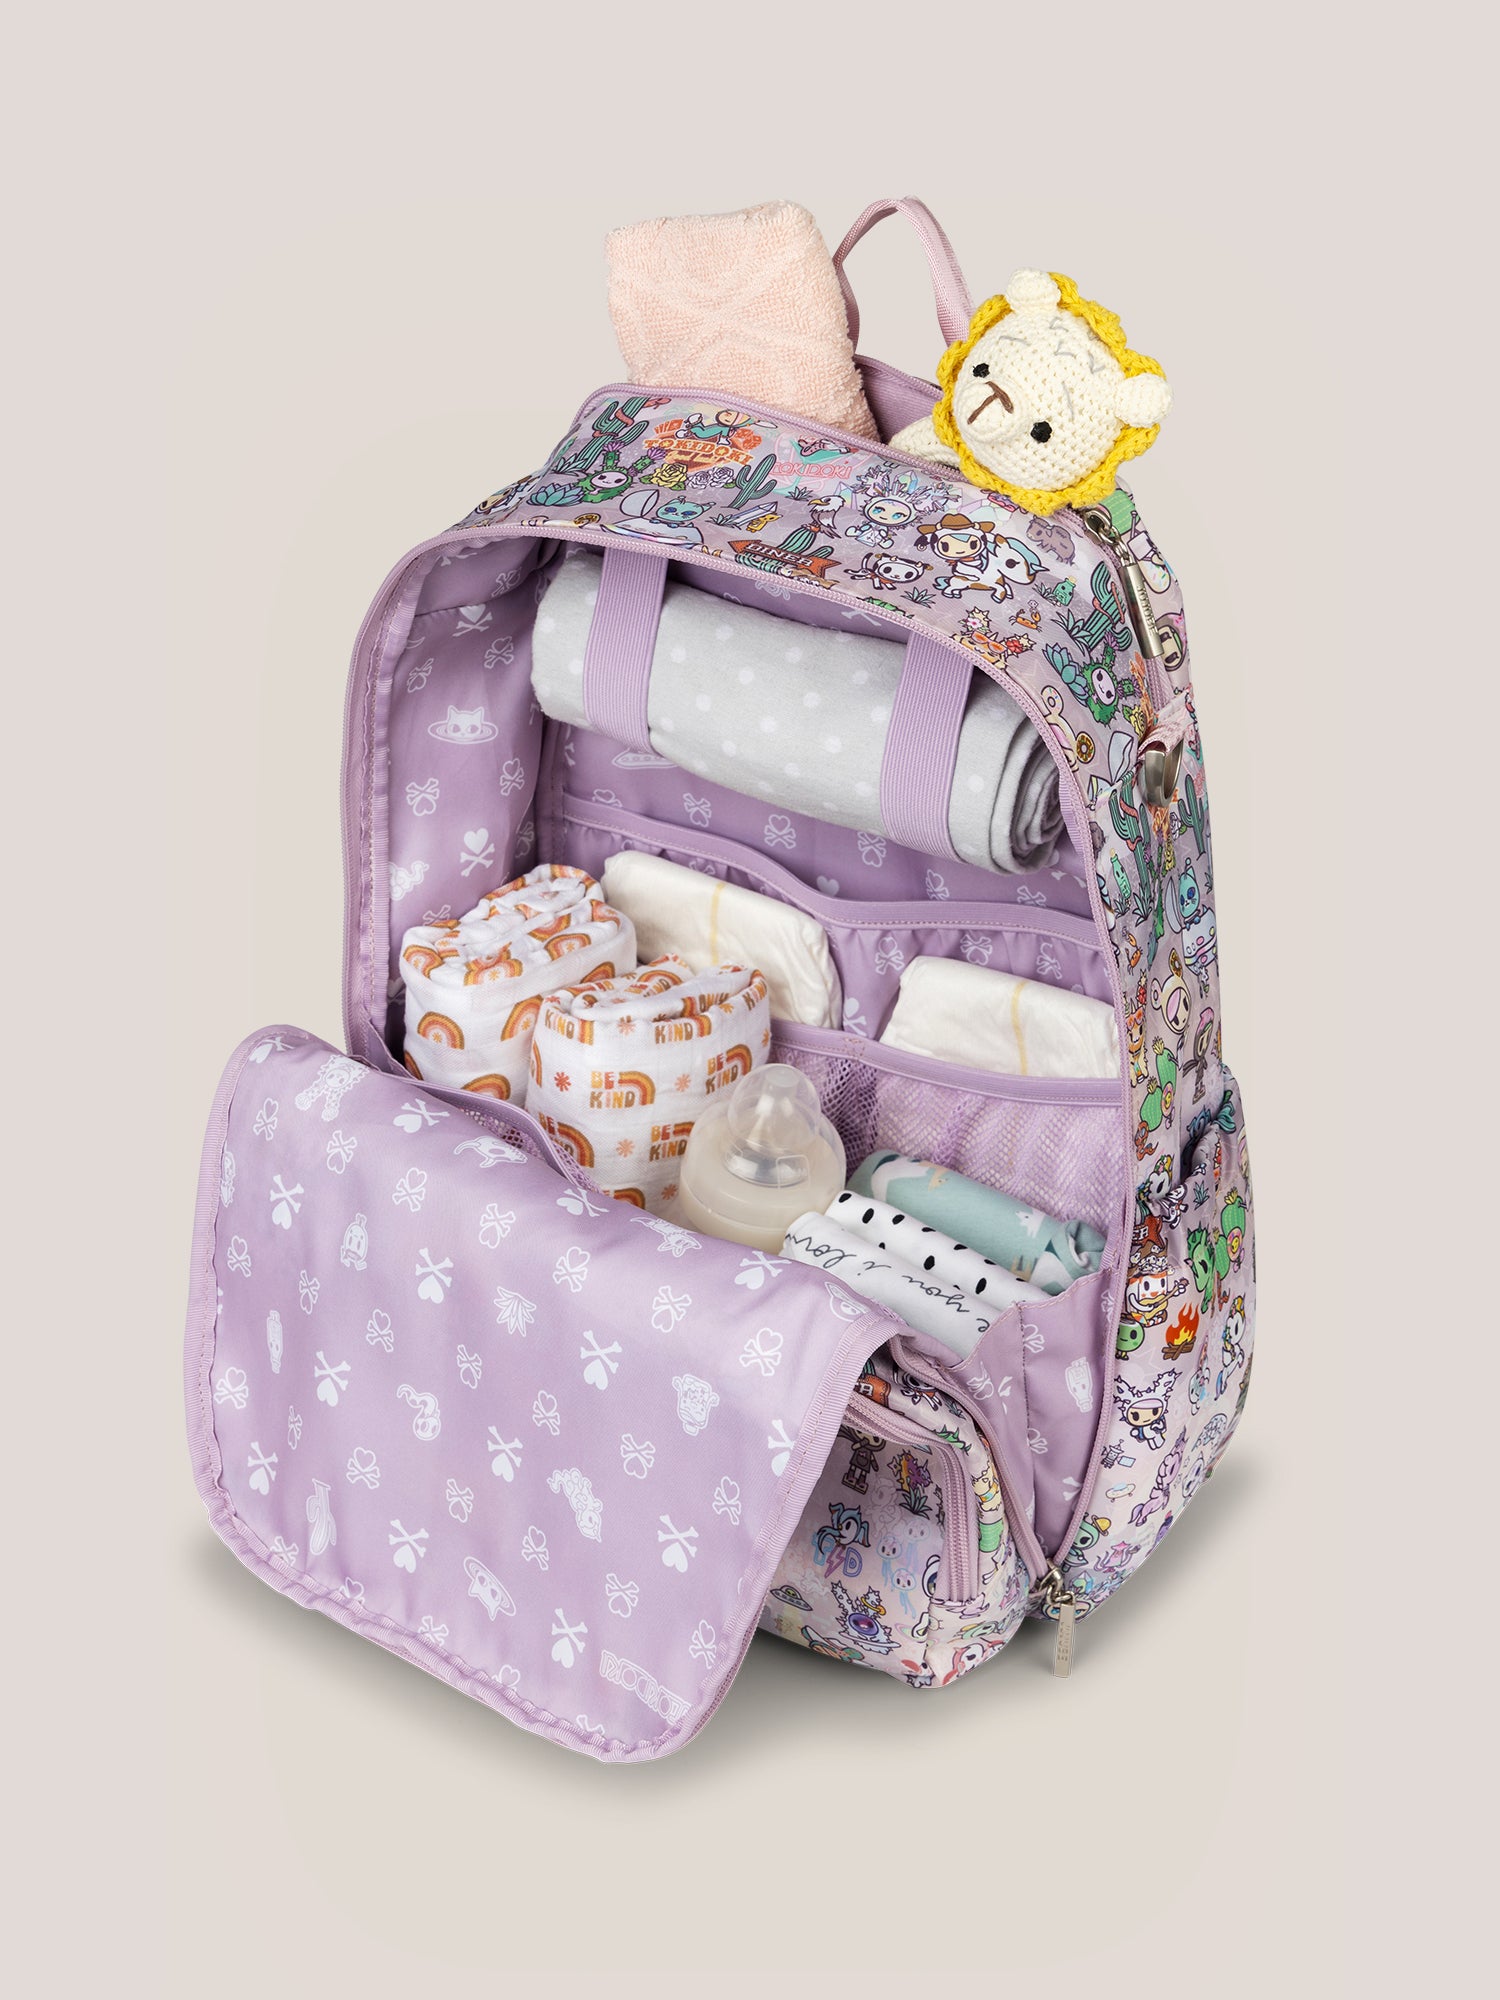 Zealous Backpack Cosmic Desert Open Front with Baby items Inside